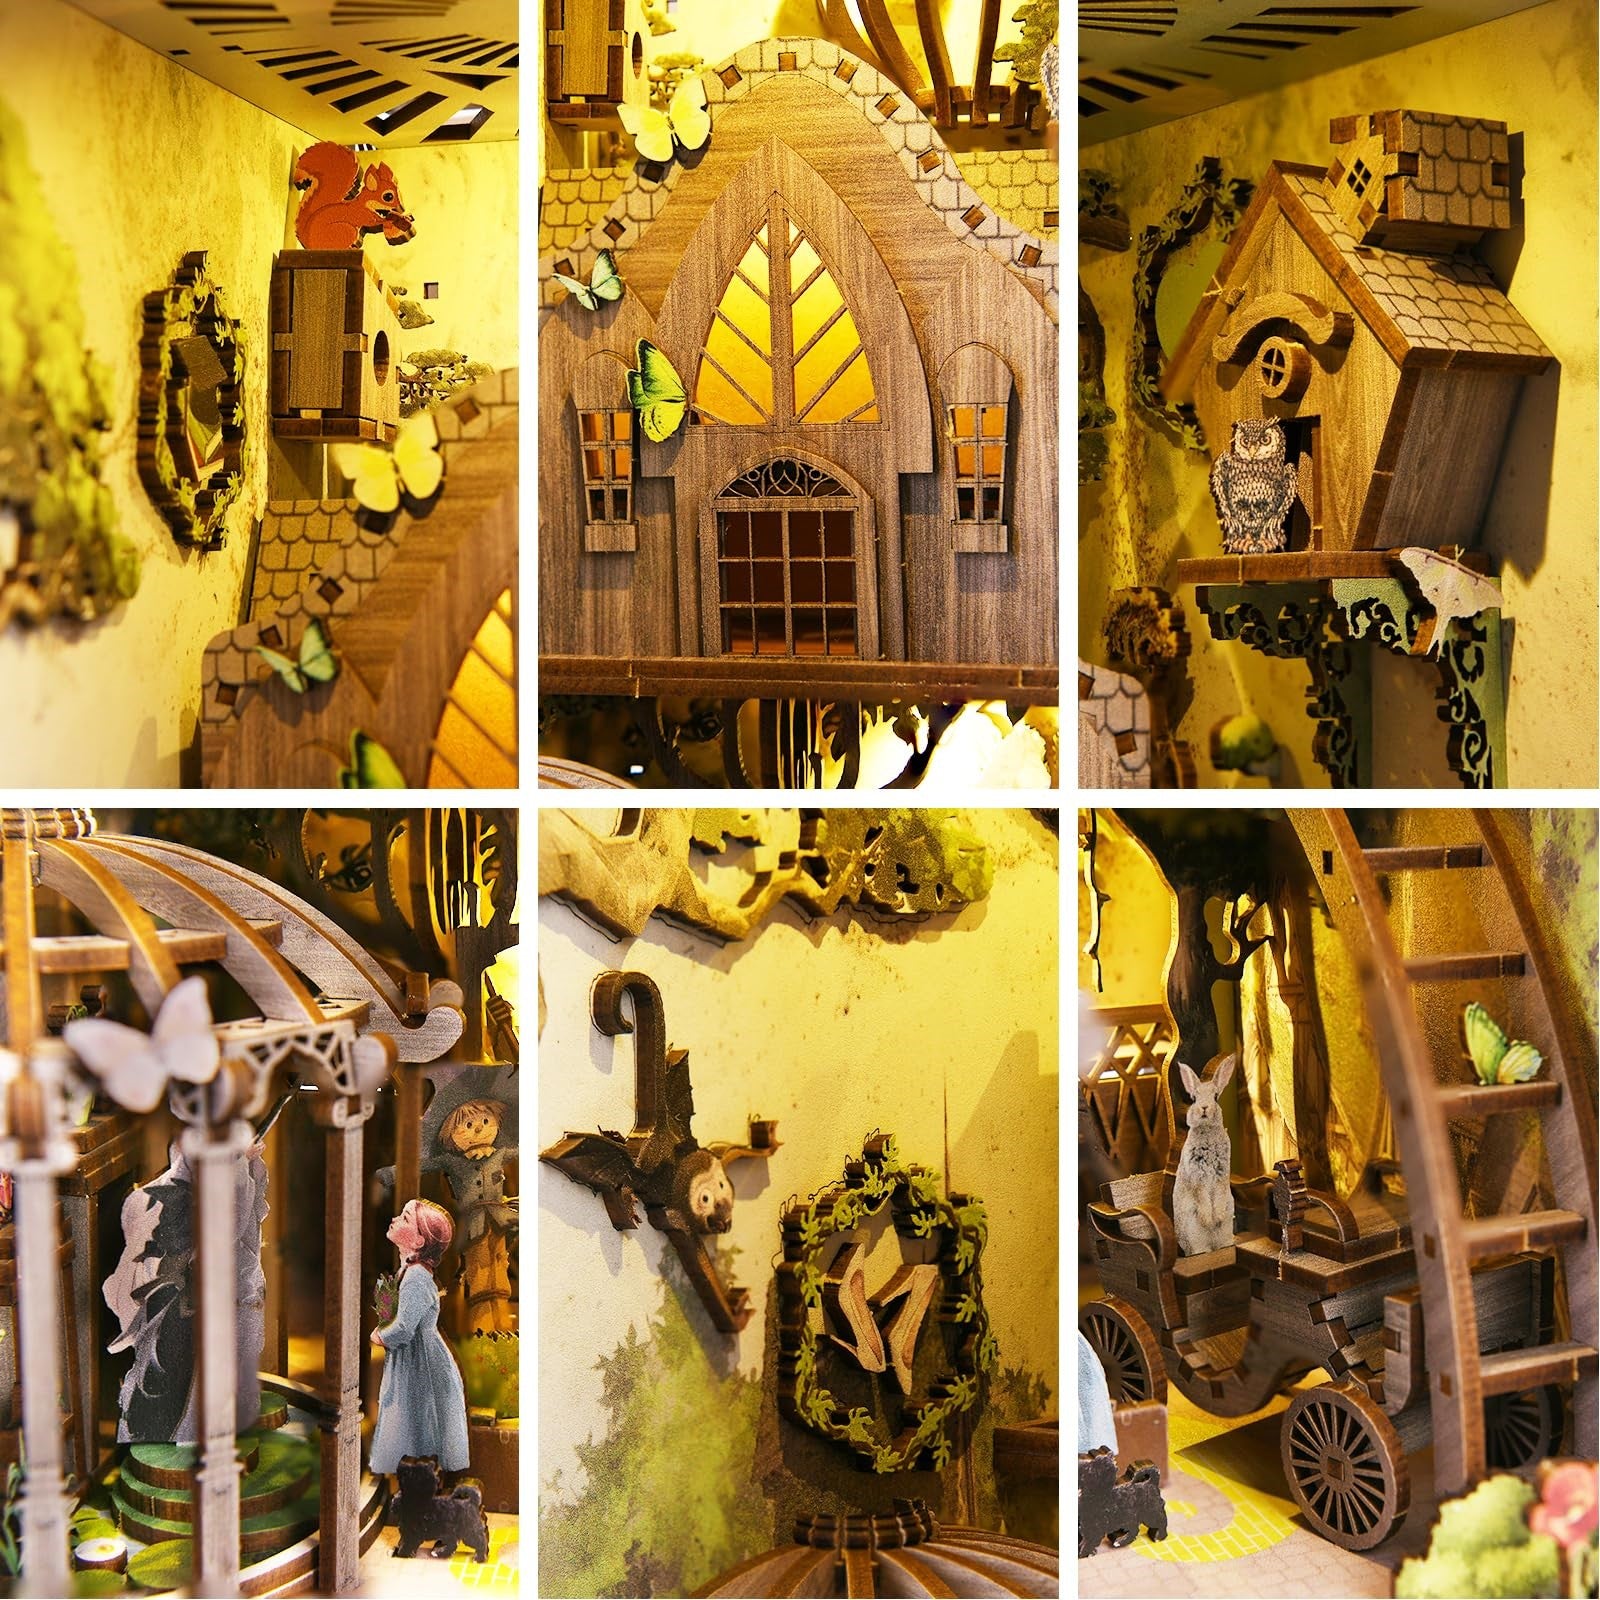 Dorothy's Journey DIY book nook kit, 3D Wooden Puzzles Bookend, Bookshelf Insert Decor Diorama, Miniature house crafts